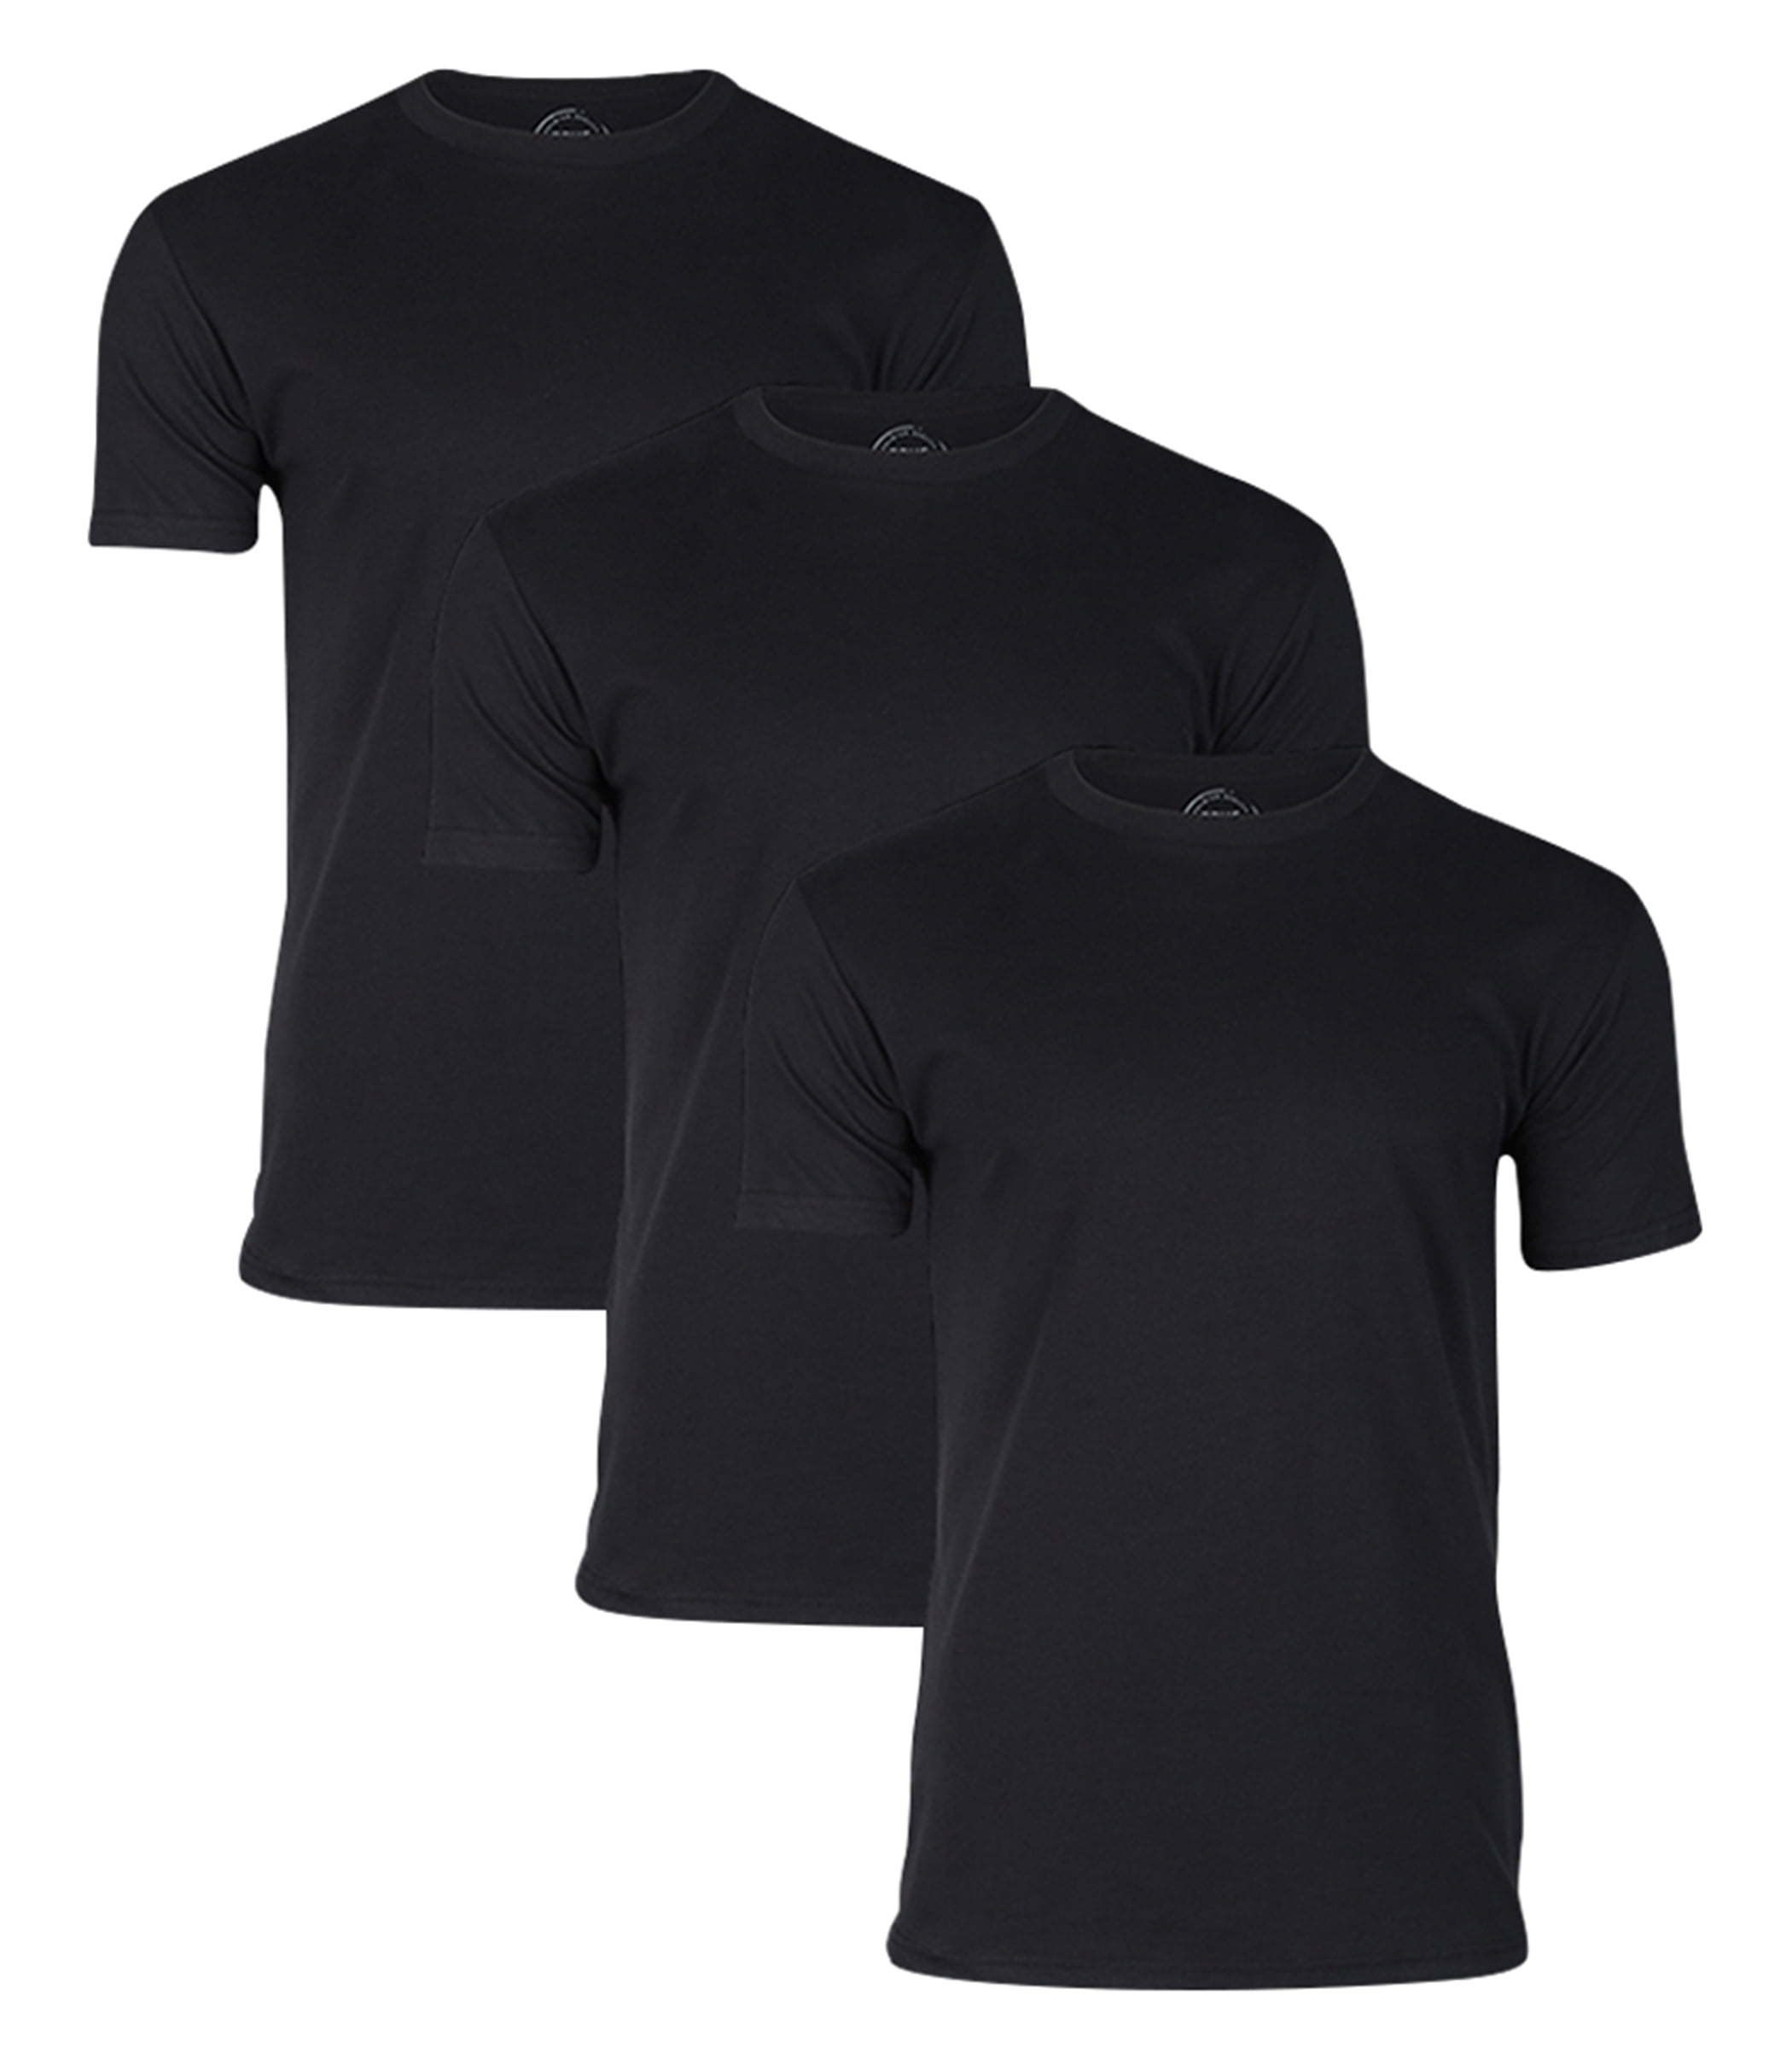 True Classic Tees Premium Fitted Men's T-Shirts - Walmart.com